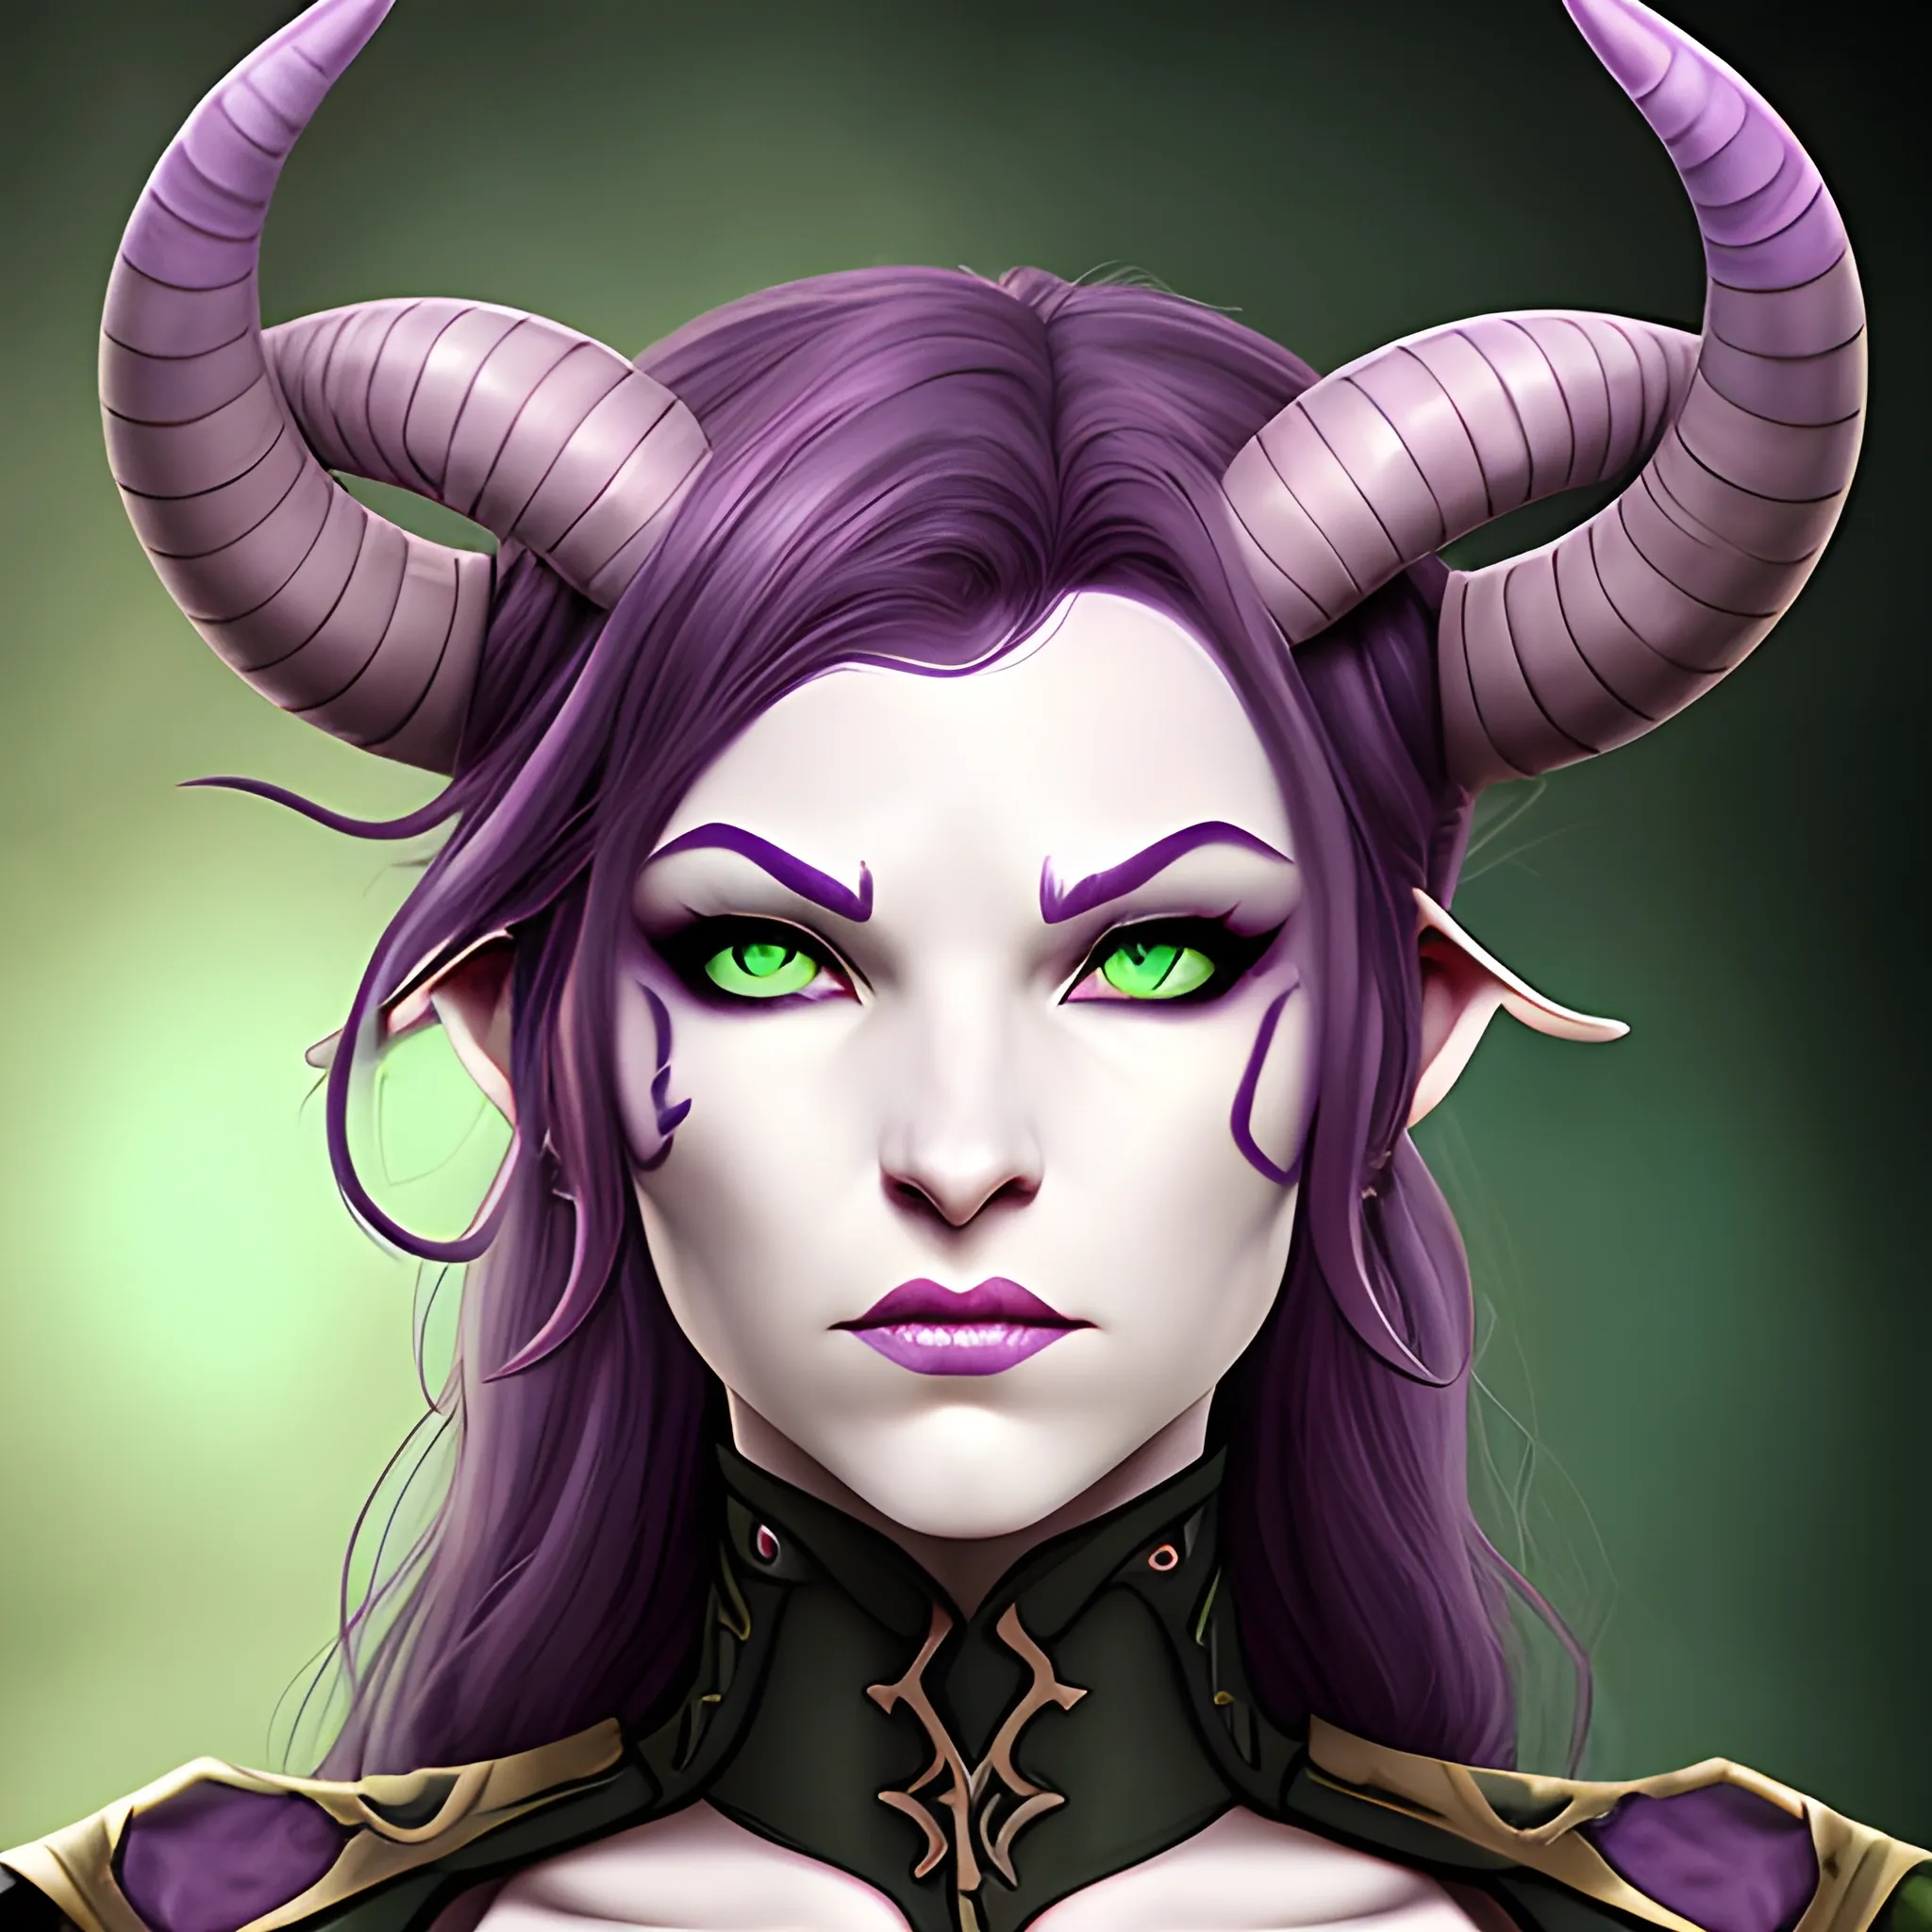 tiefling woman, pale light purple skin, large horns, heterochromia, green eyes, brunette hair
